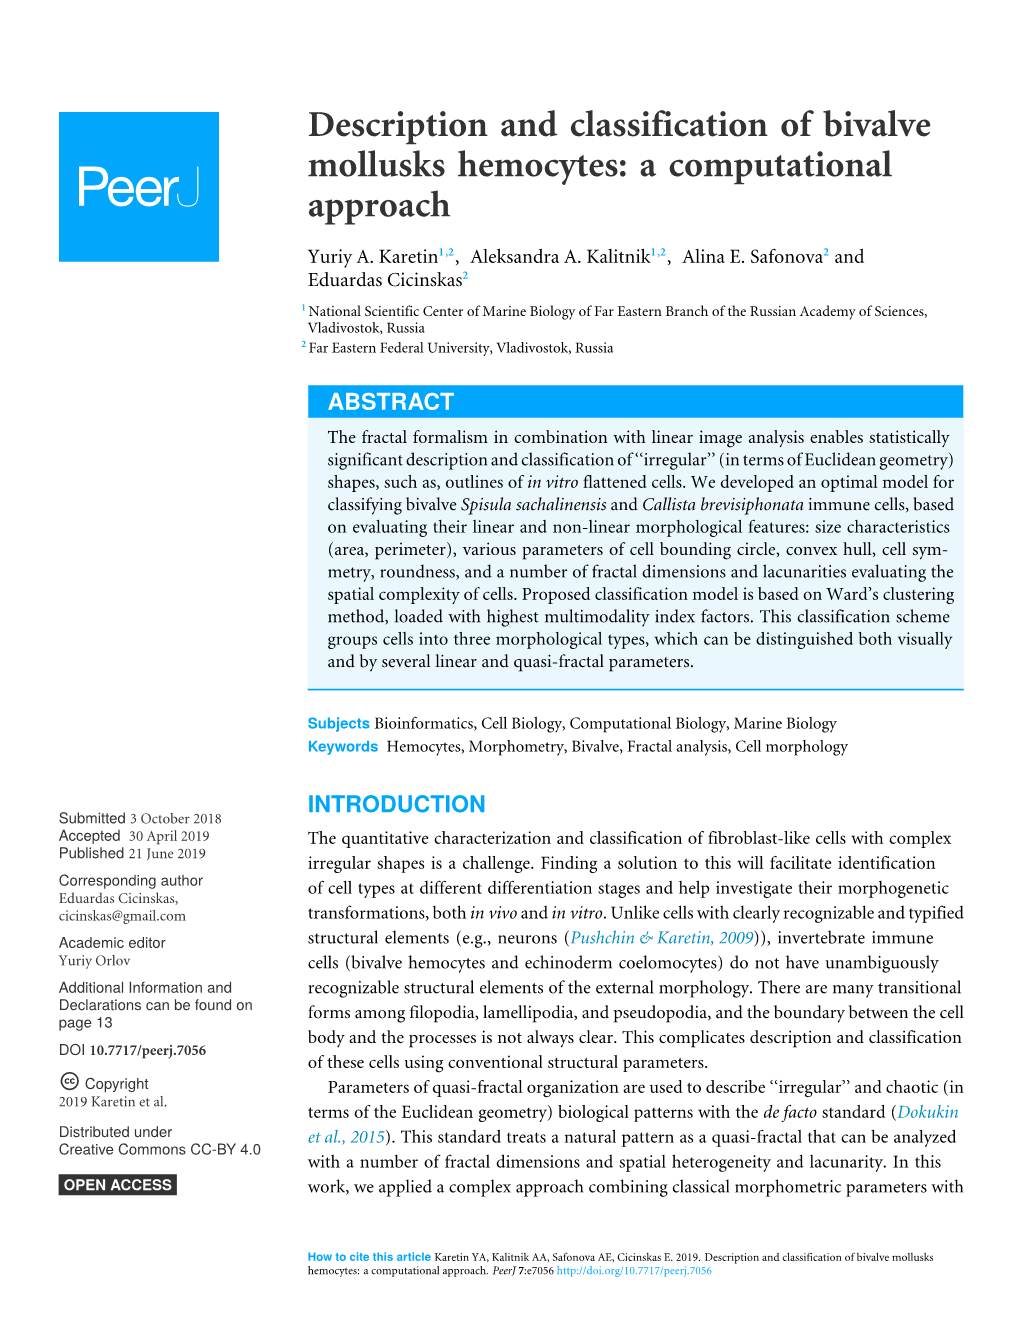 Description and Classification of Bivalve Mollusks Hemocytes: a Computational Approach